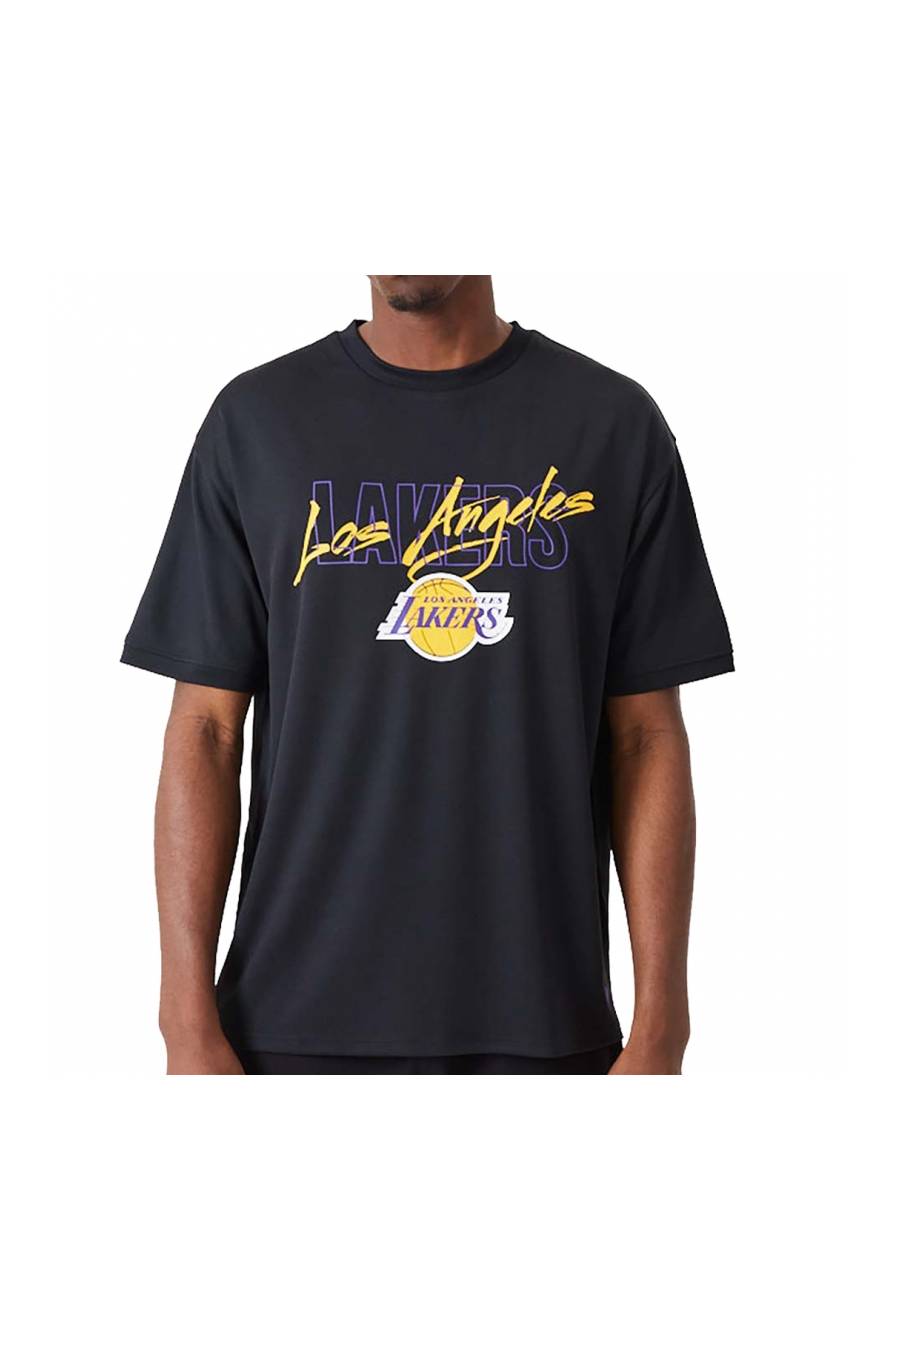 Camiseta New Era Script Os Mesh Lakers 60332200